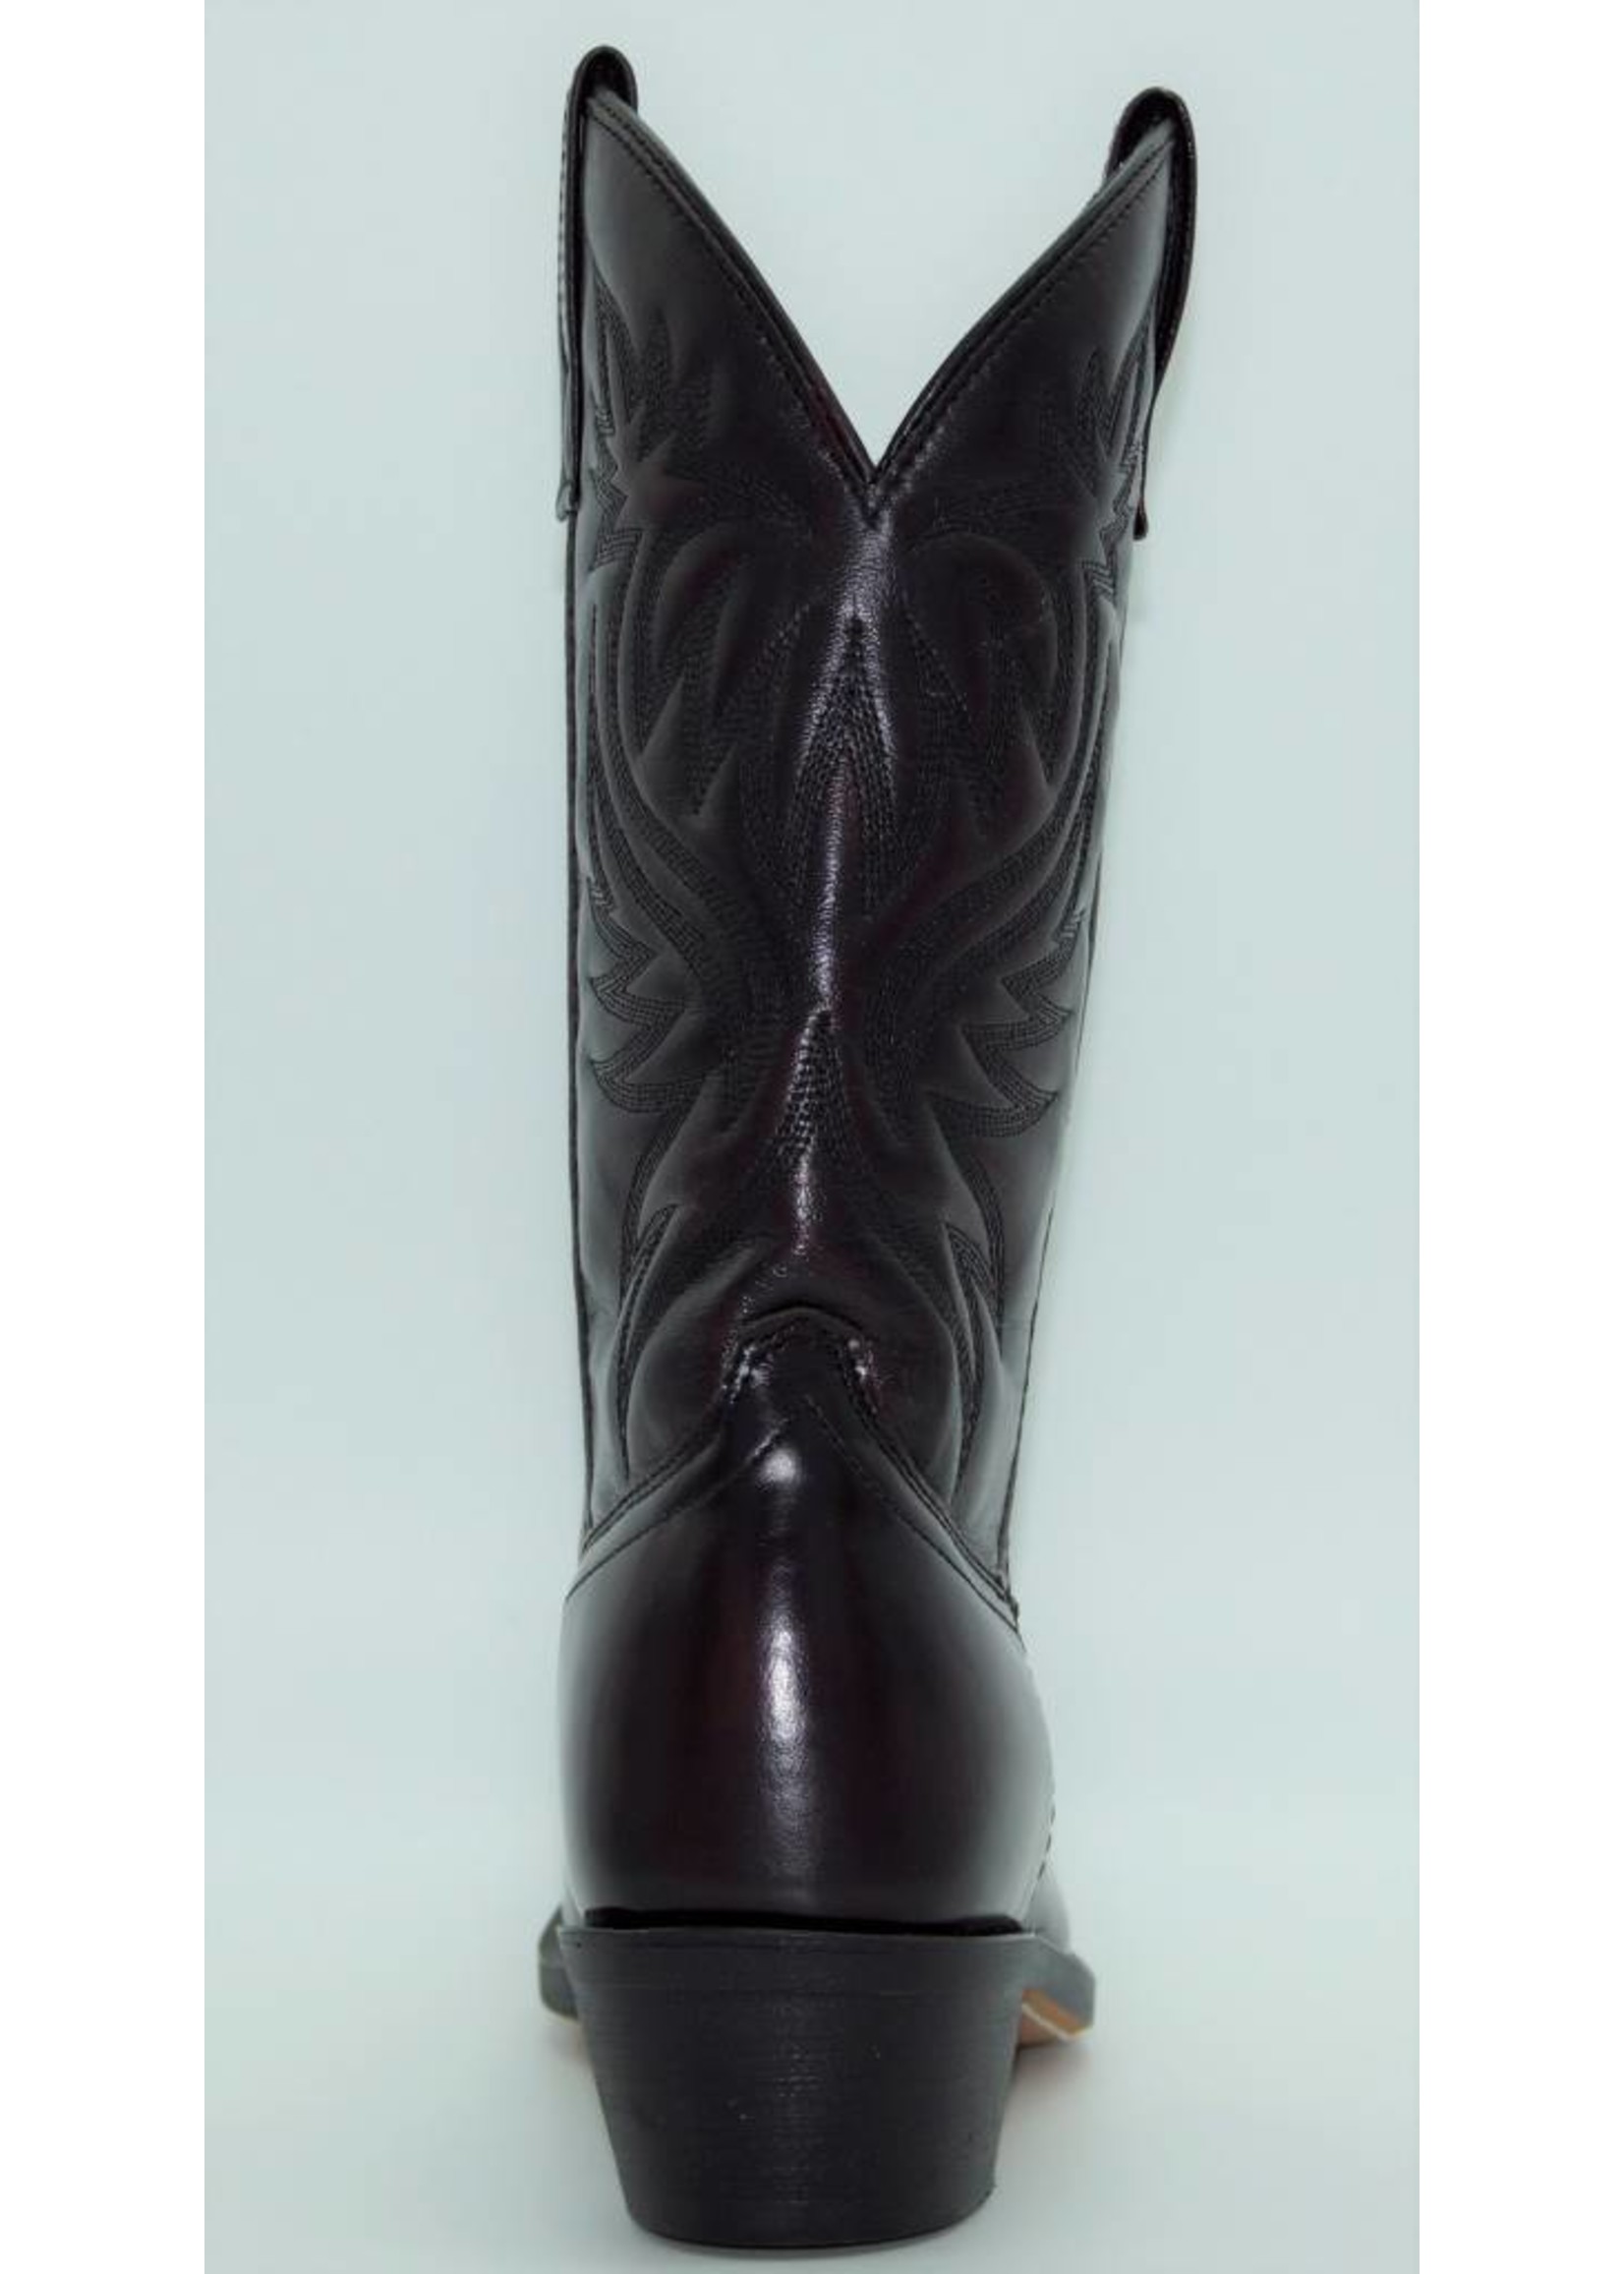 Laredo Men's London Black Cherry Leather Foot Western Boot 4216